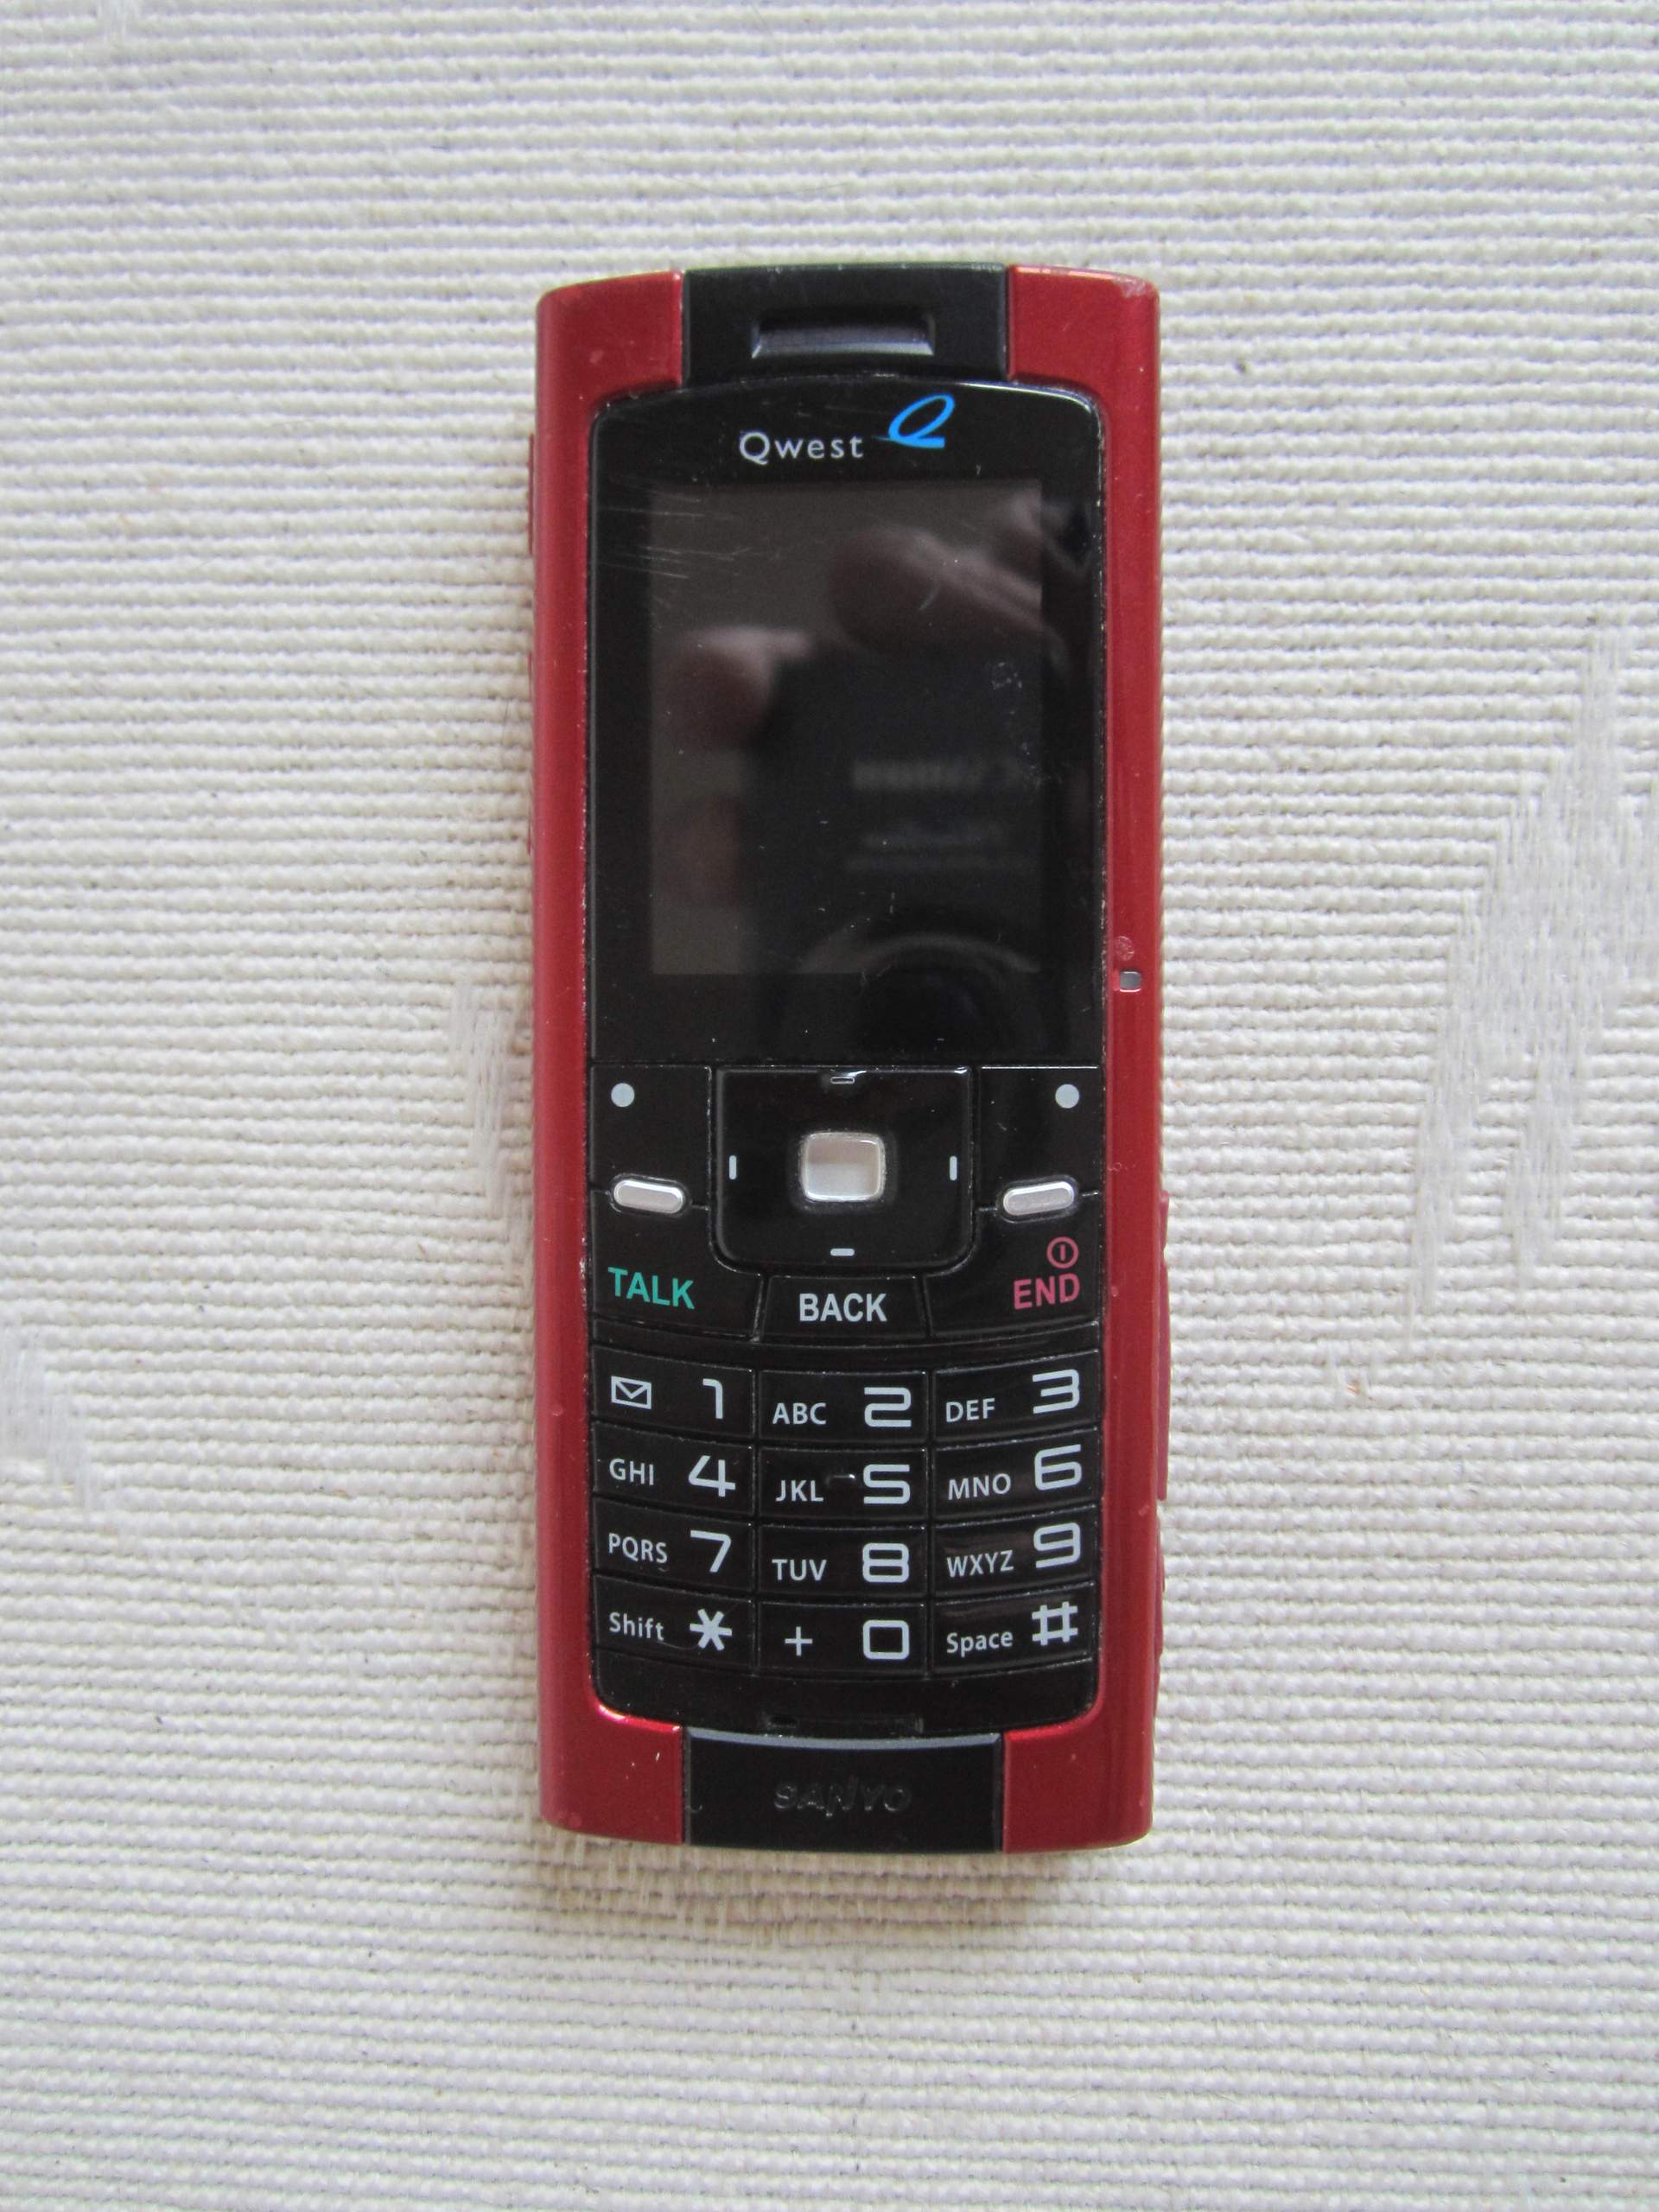 red Sanyo Qwest bar phone